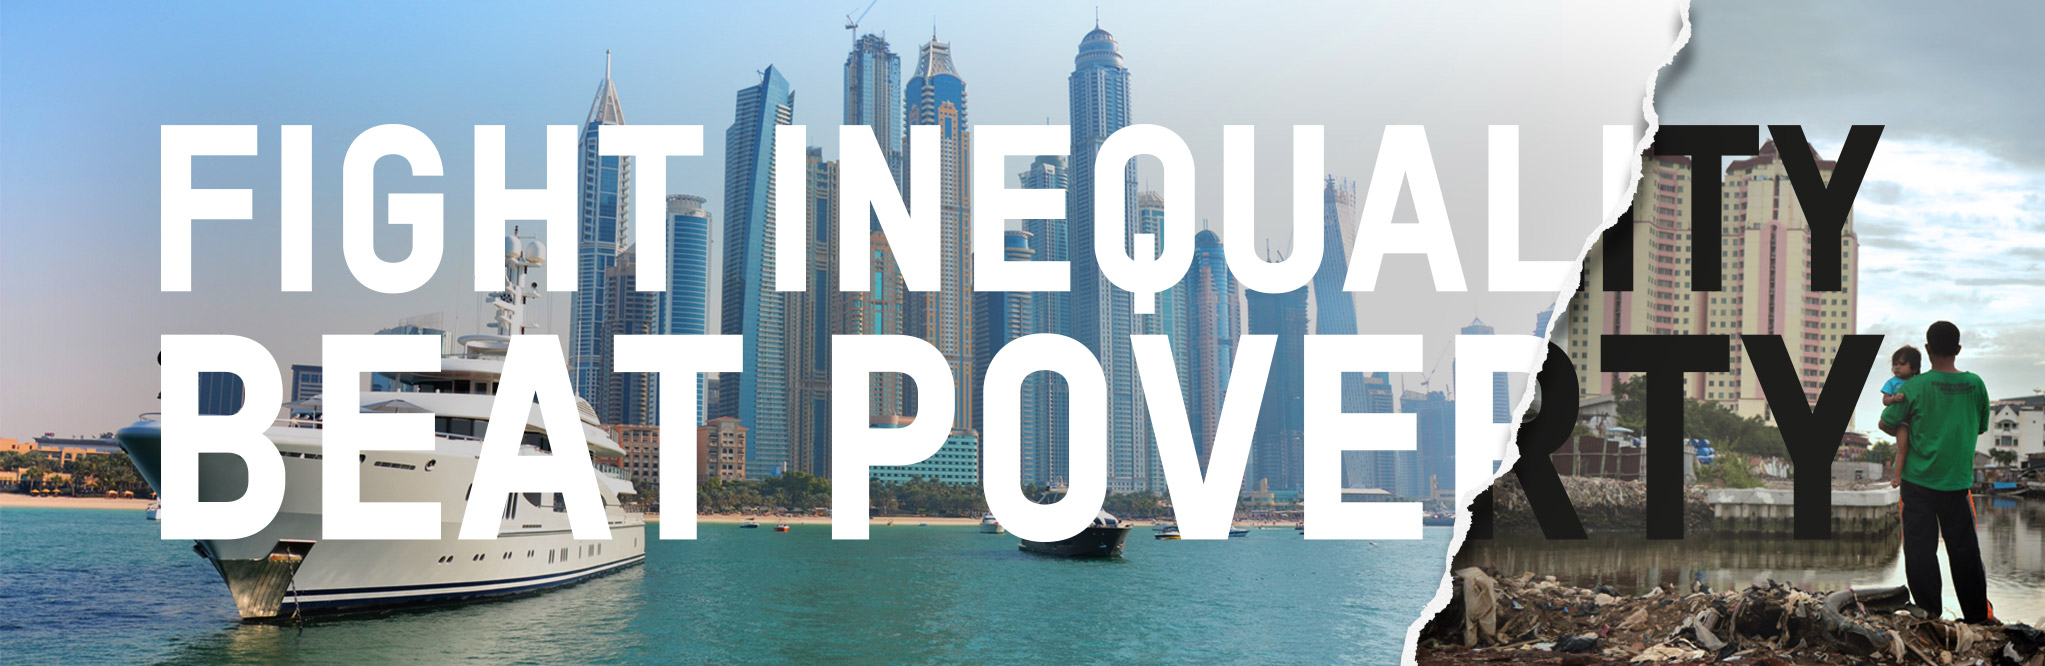 Fight inequality, beat poverty